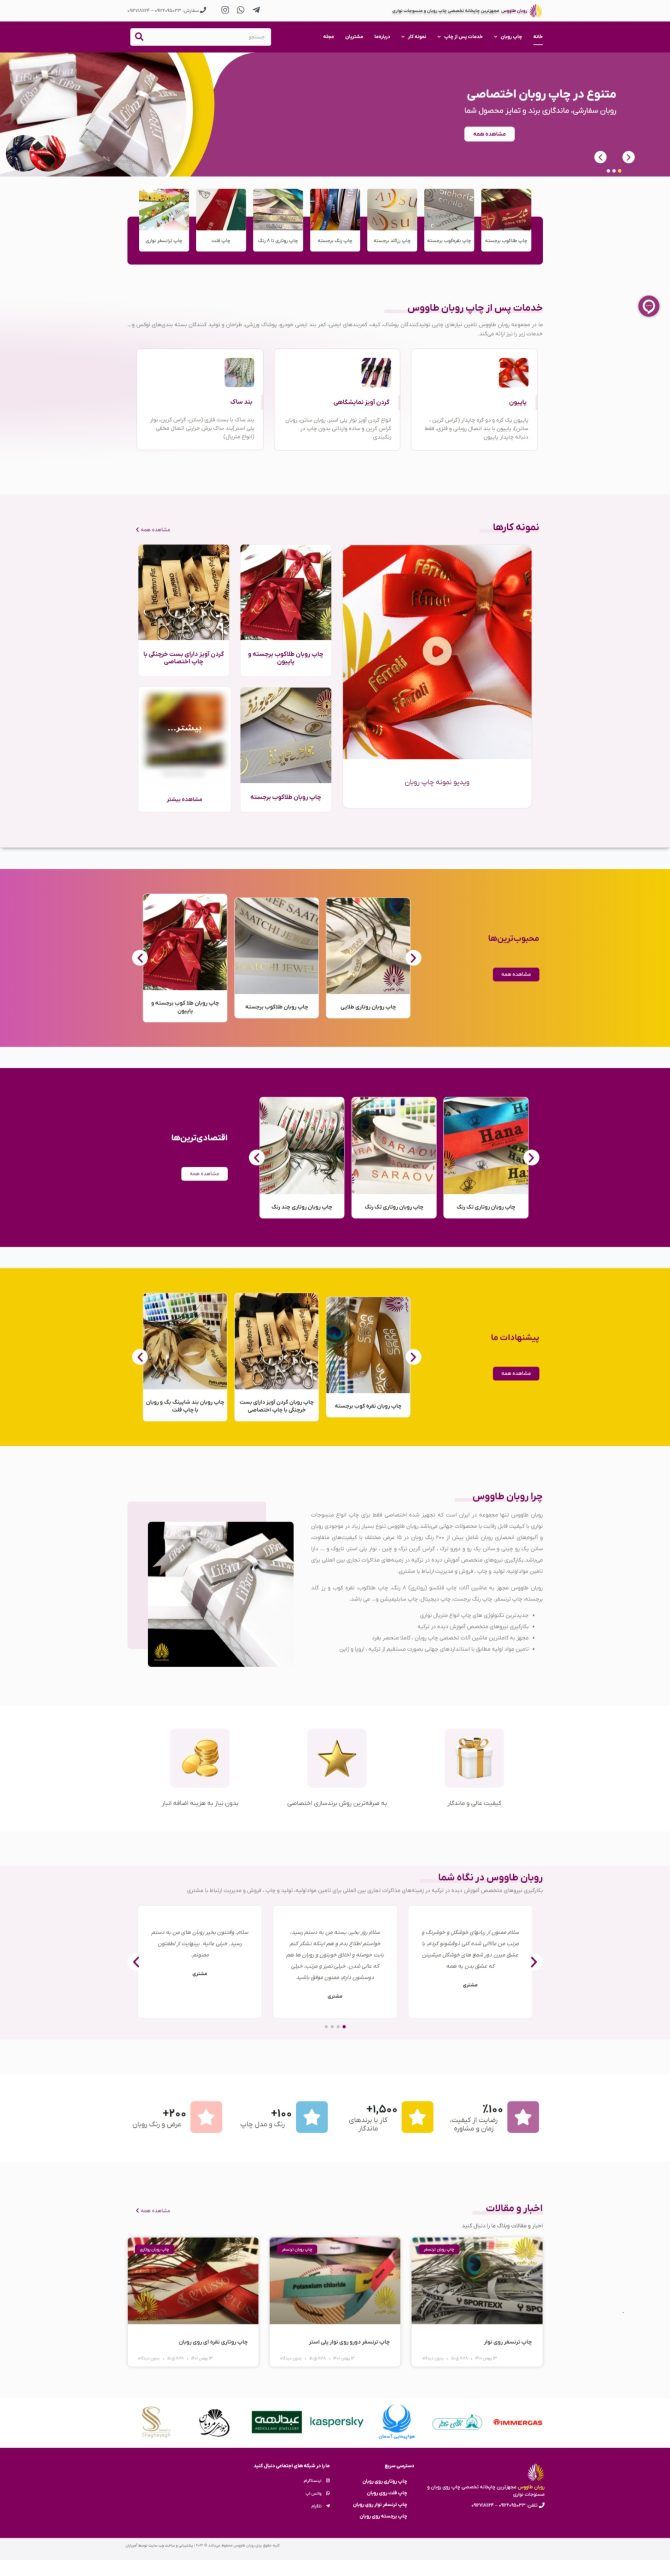 طراحی وب سایت چاپخانه روبان طاووس | طراحی وب سایت, نمونه کار